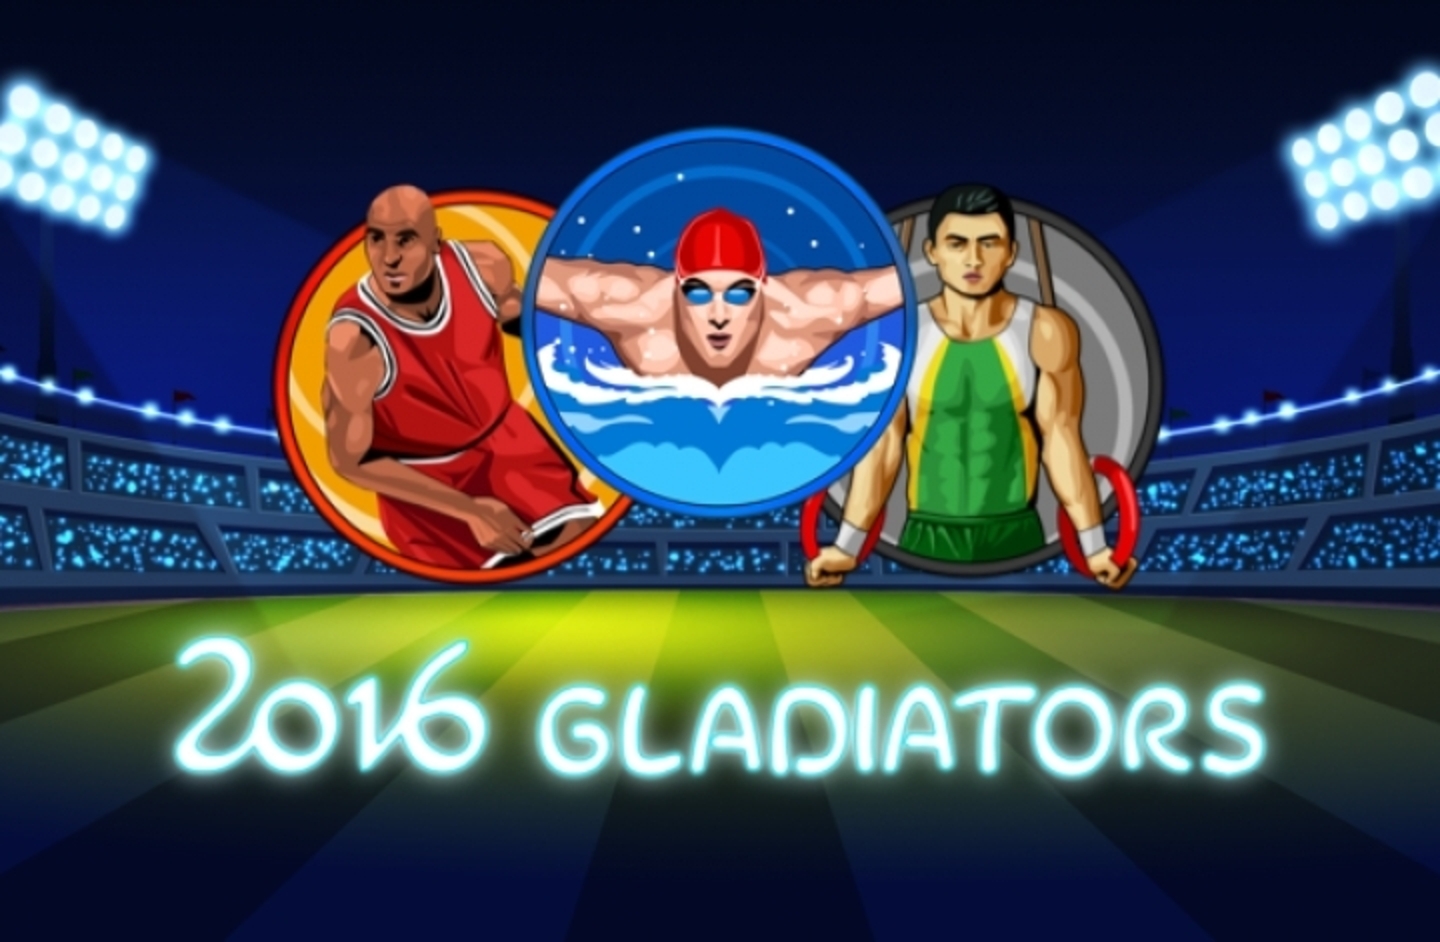 2016 Gladiators demo